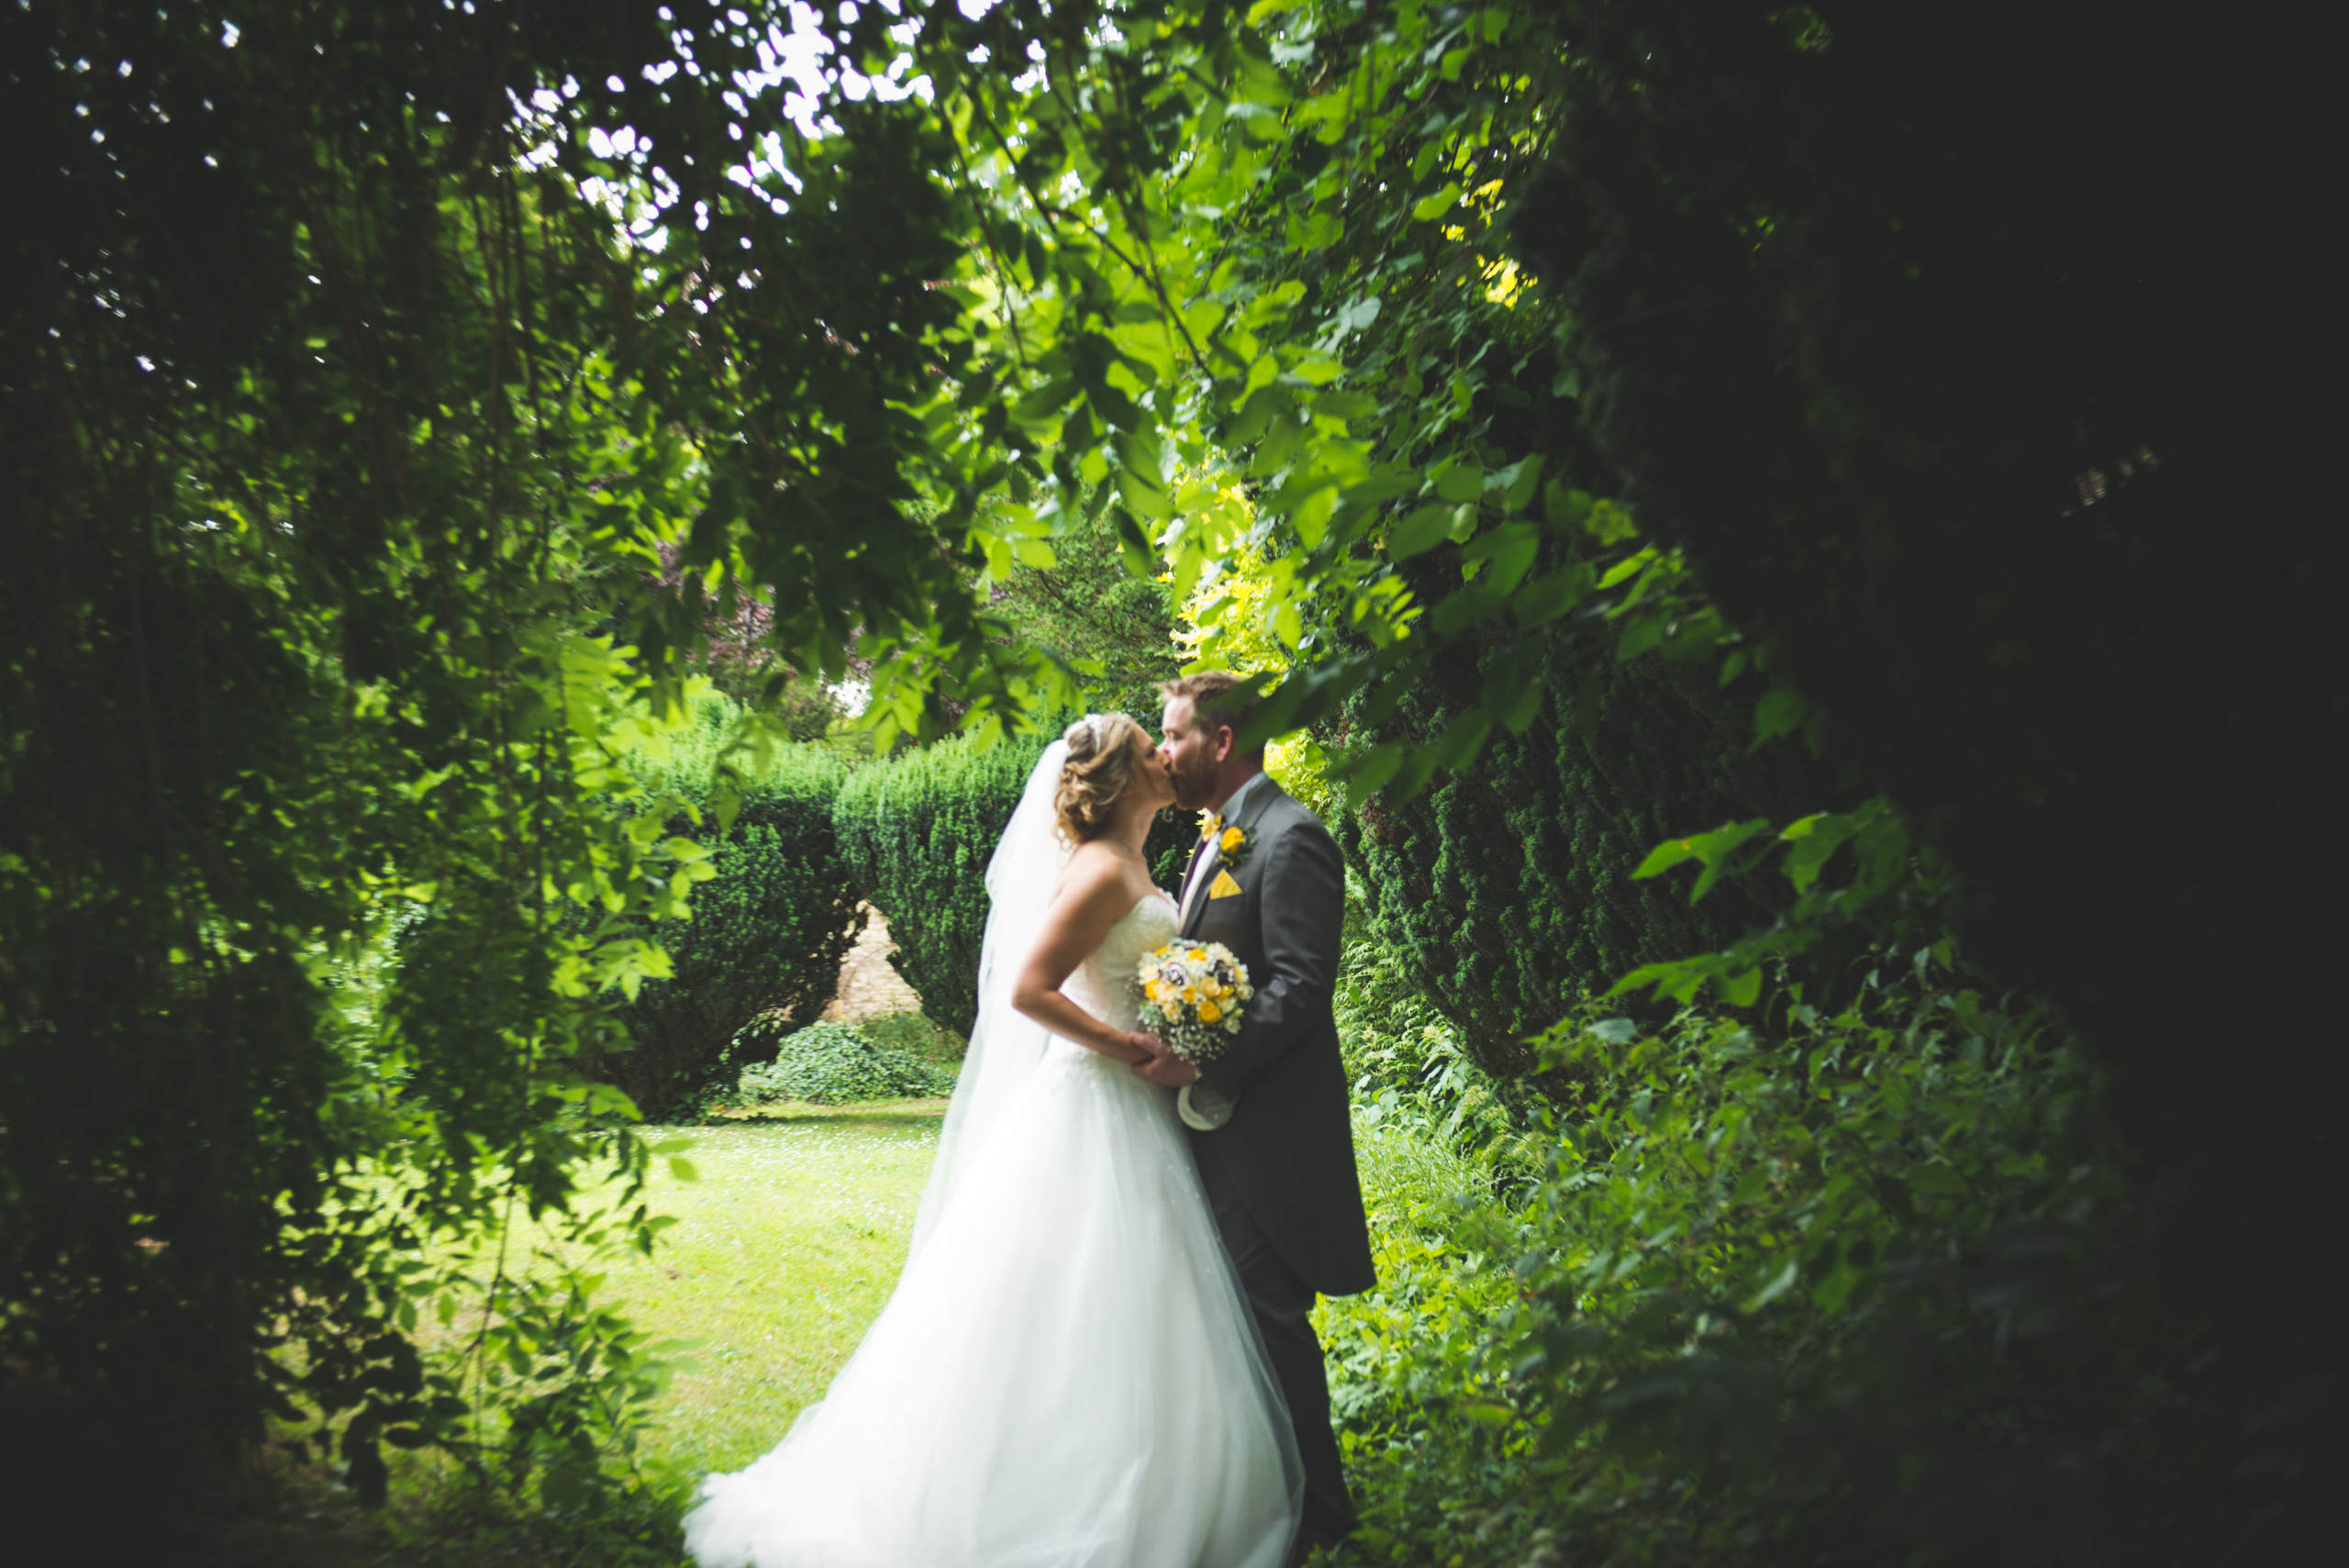 Church wedding, wedding photography, wedding photographer, bride and groom, quiet time